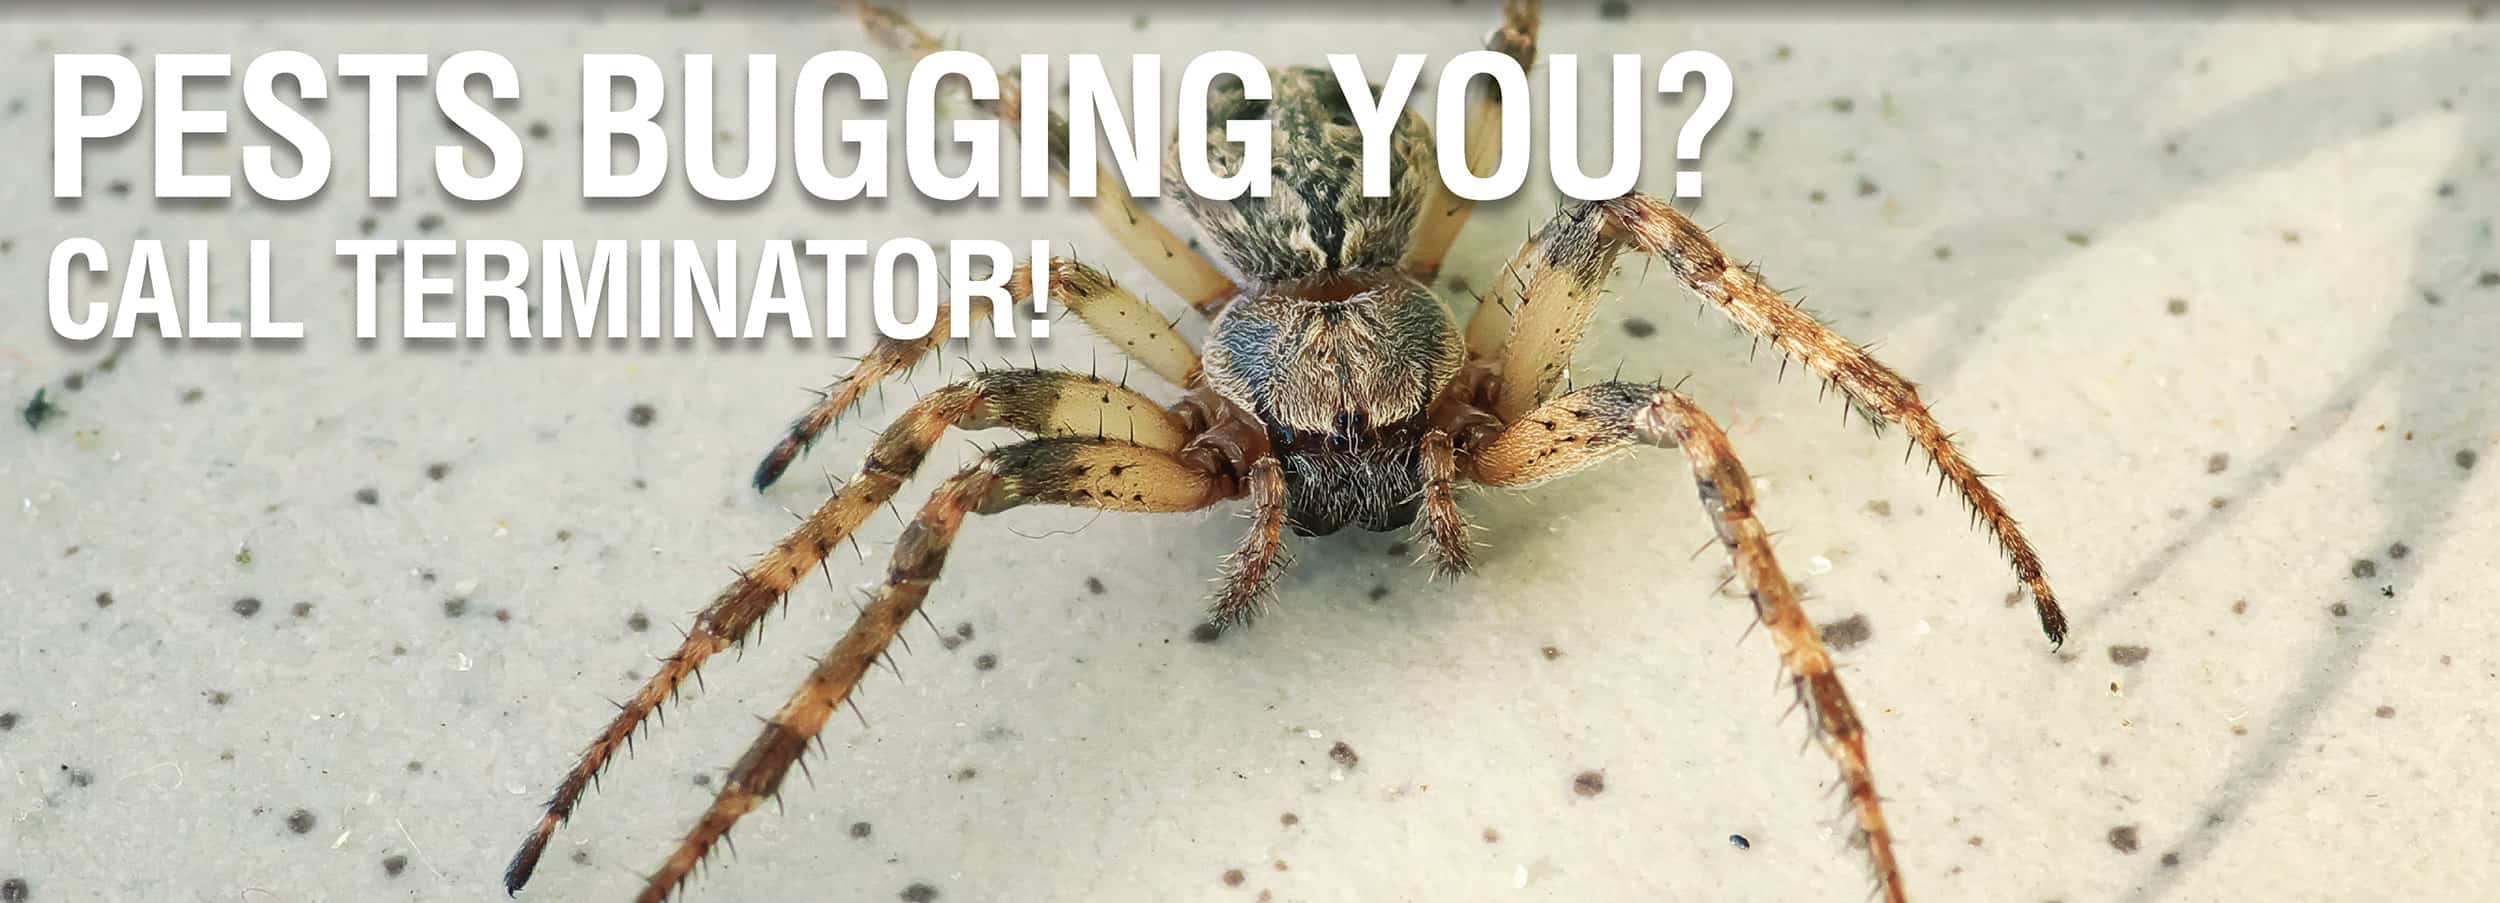 Pests bugging you?